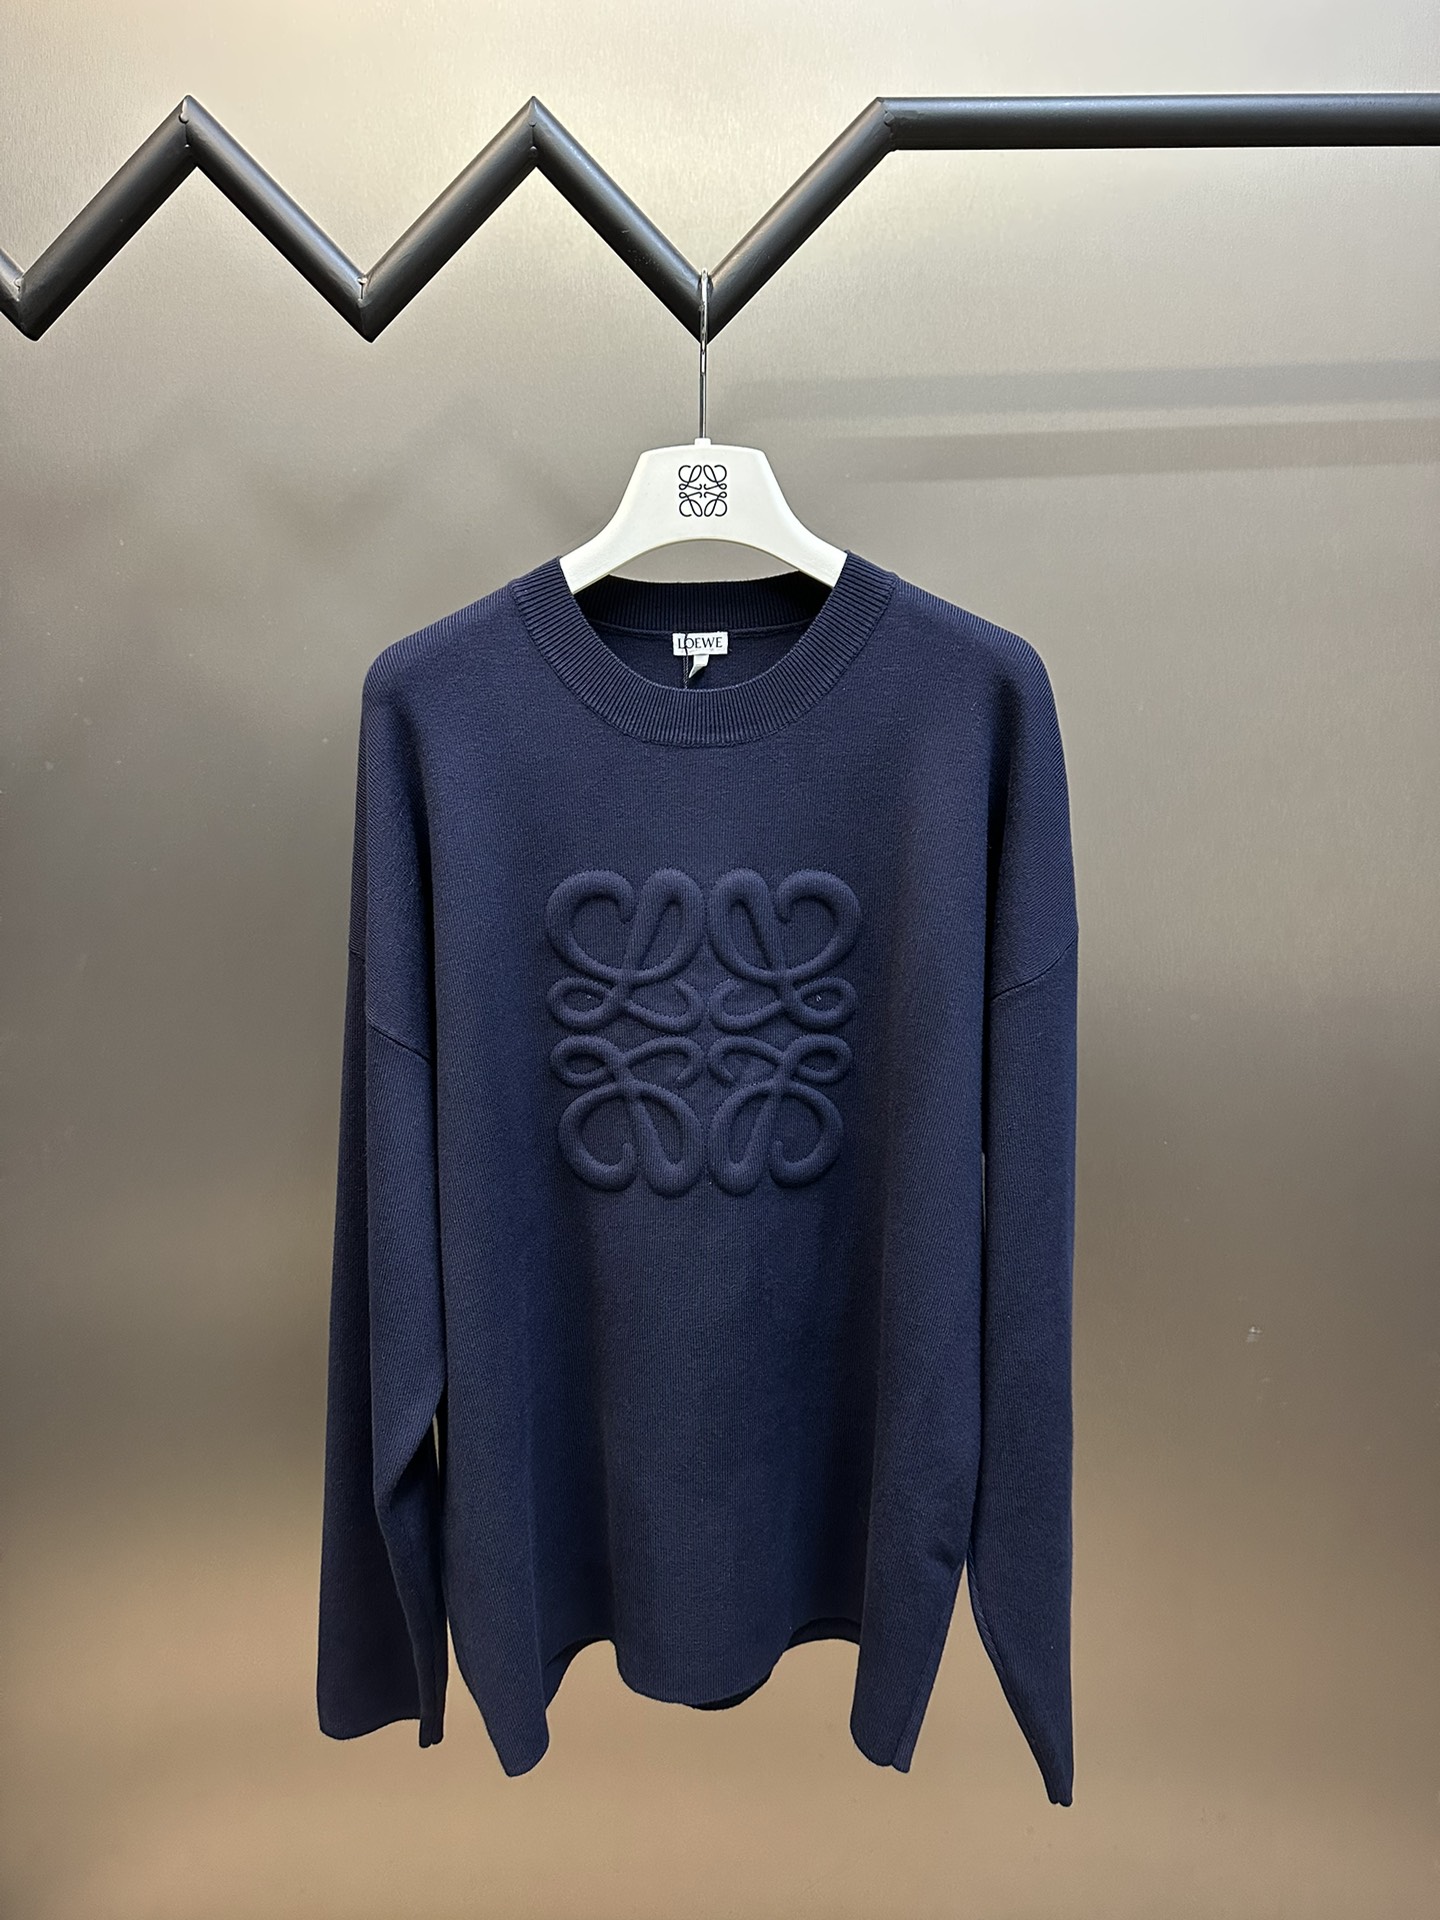 Loewe Clothing Sweatshirts Unisex Cotton Knitting Spandex Wool